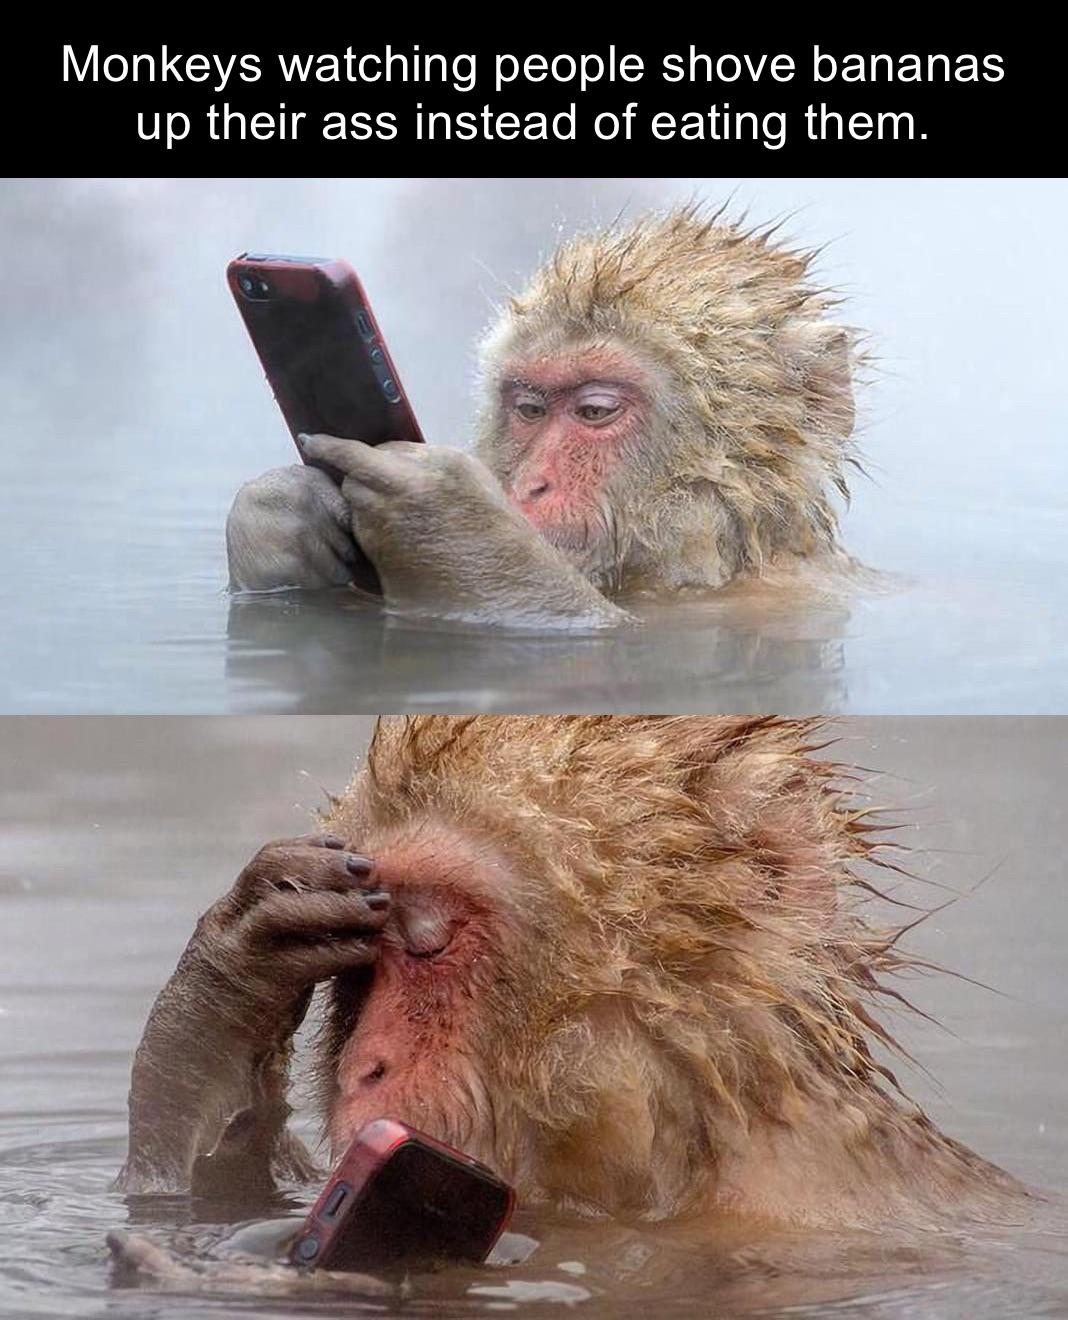 dank memes - monkey phone meme - Monkeys watching people shove bananas up their ass instead of eating them.